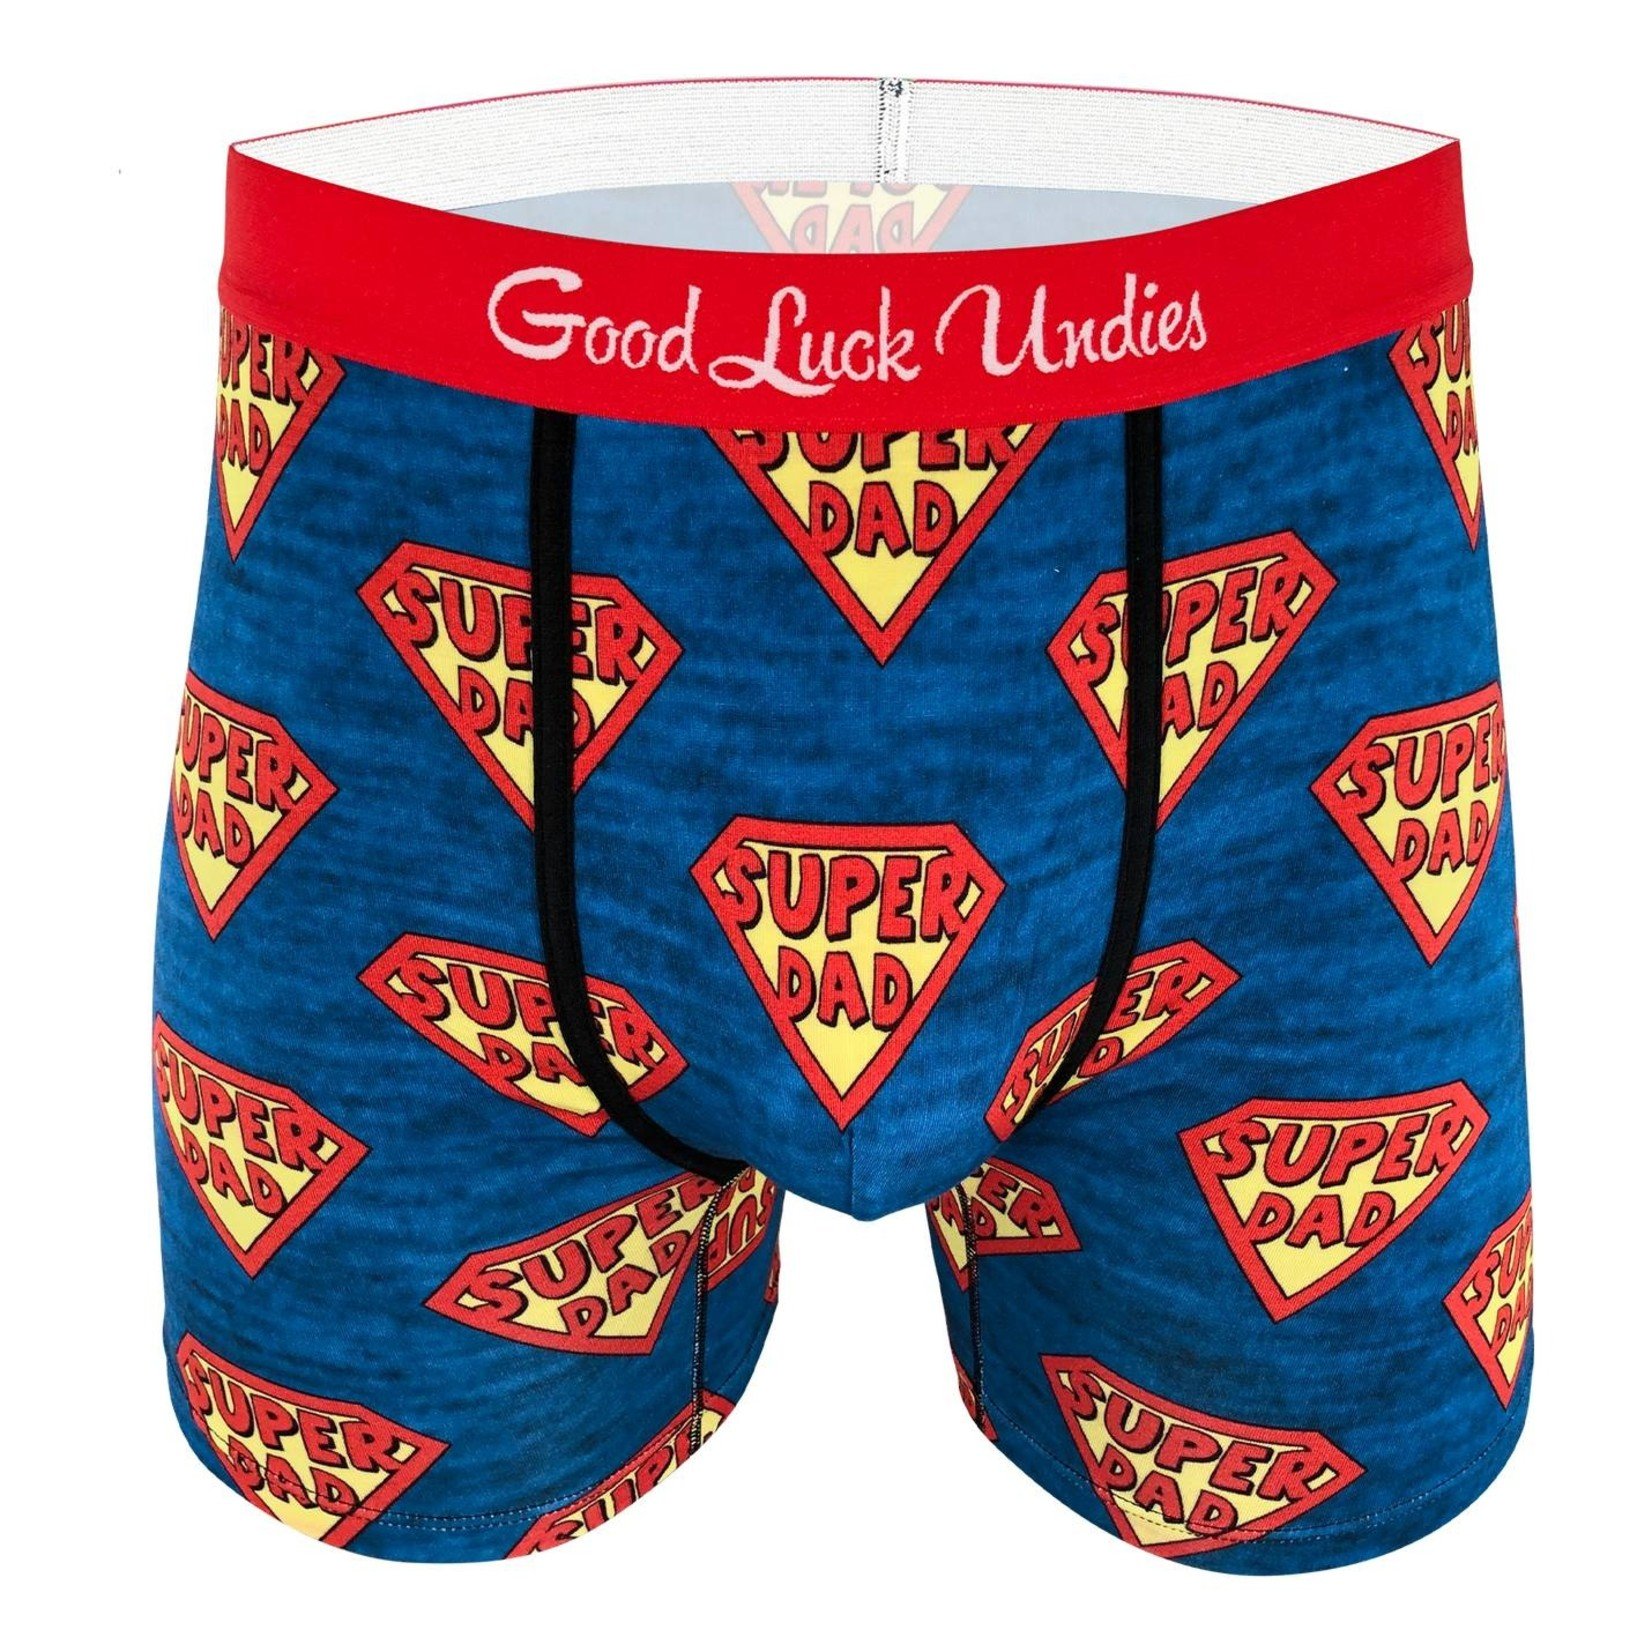 Astronaut Boxer Brief Underwear by Good Luck Undies - The Periwinkle Shoppe